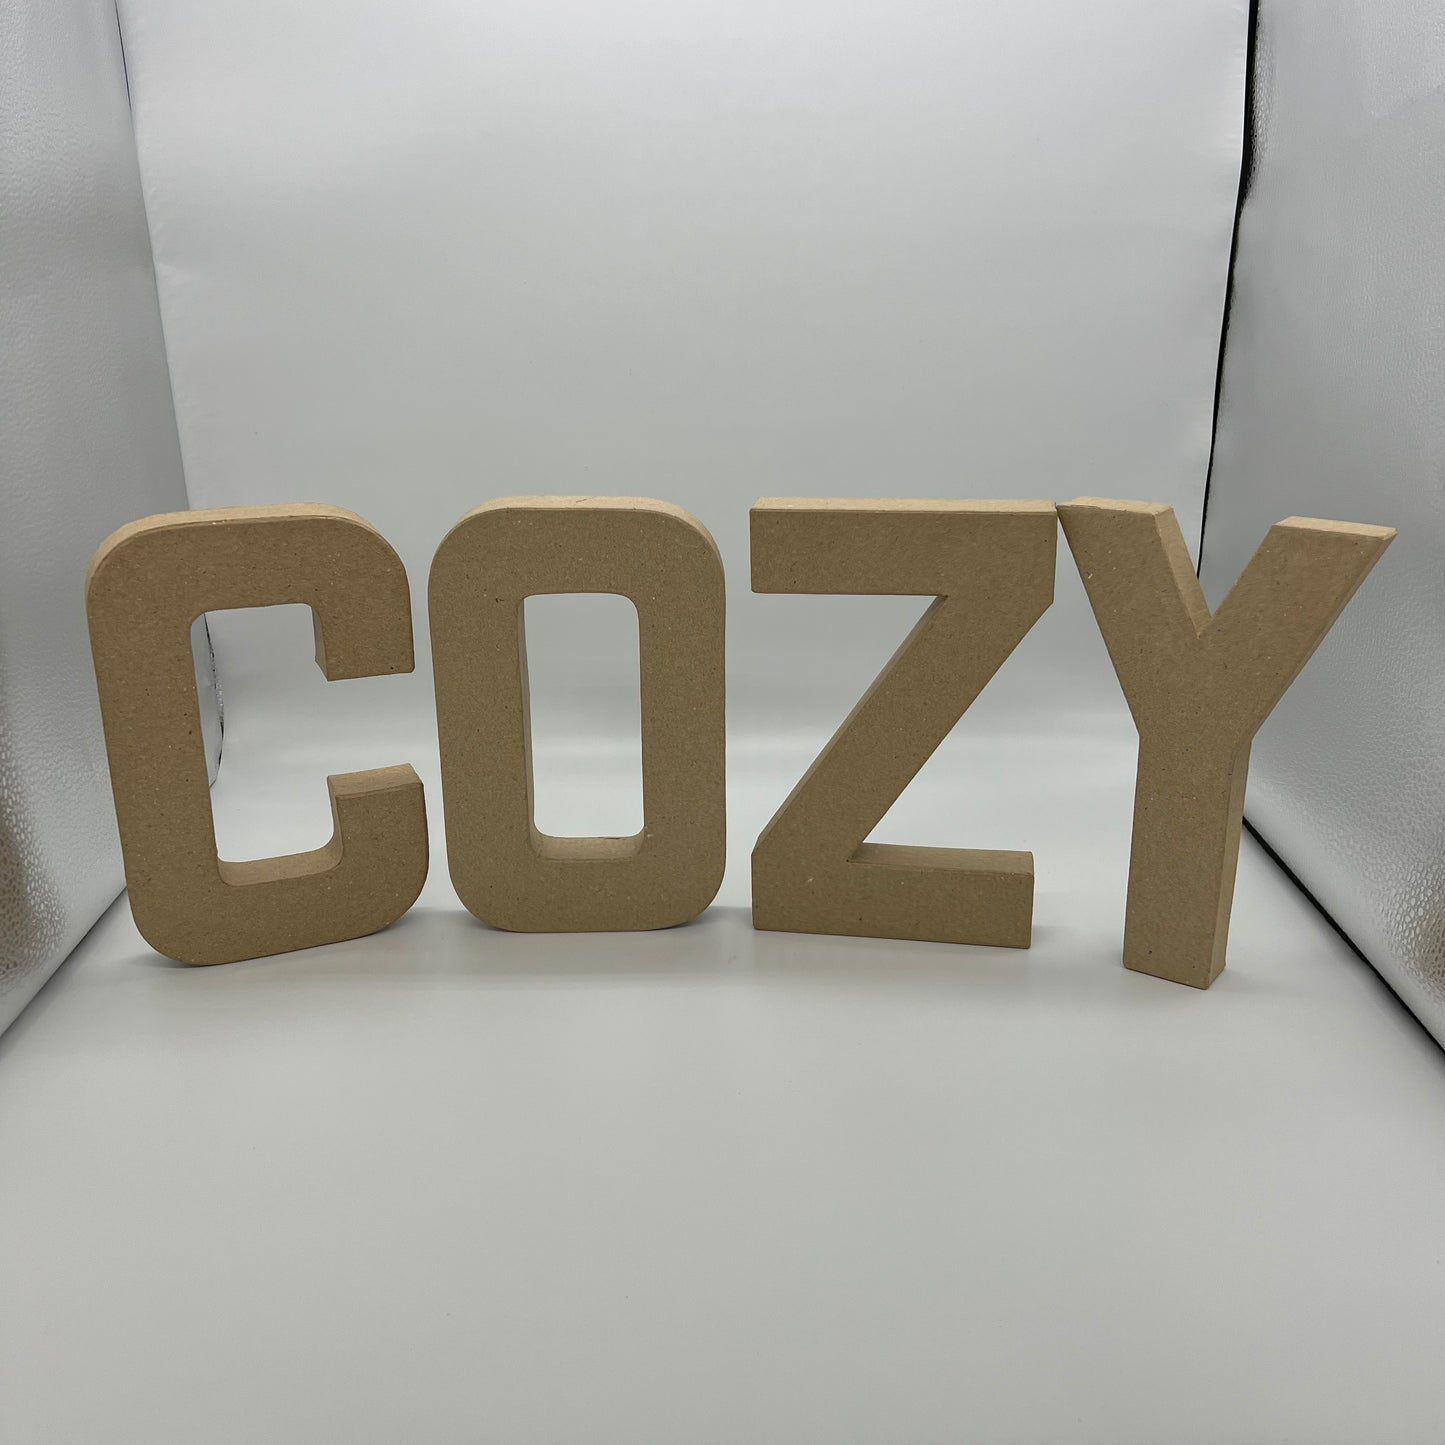 C-O-Z-Y Cardboard Letters